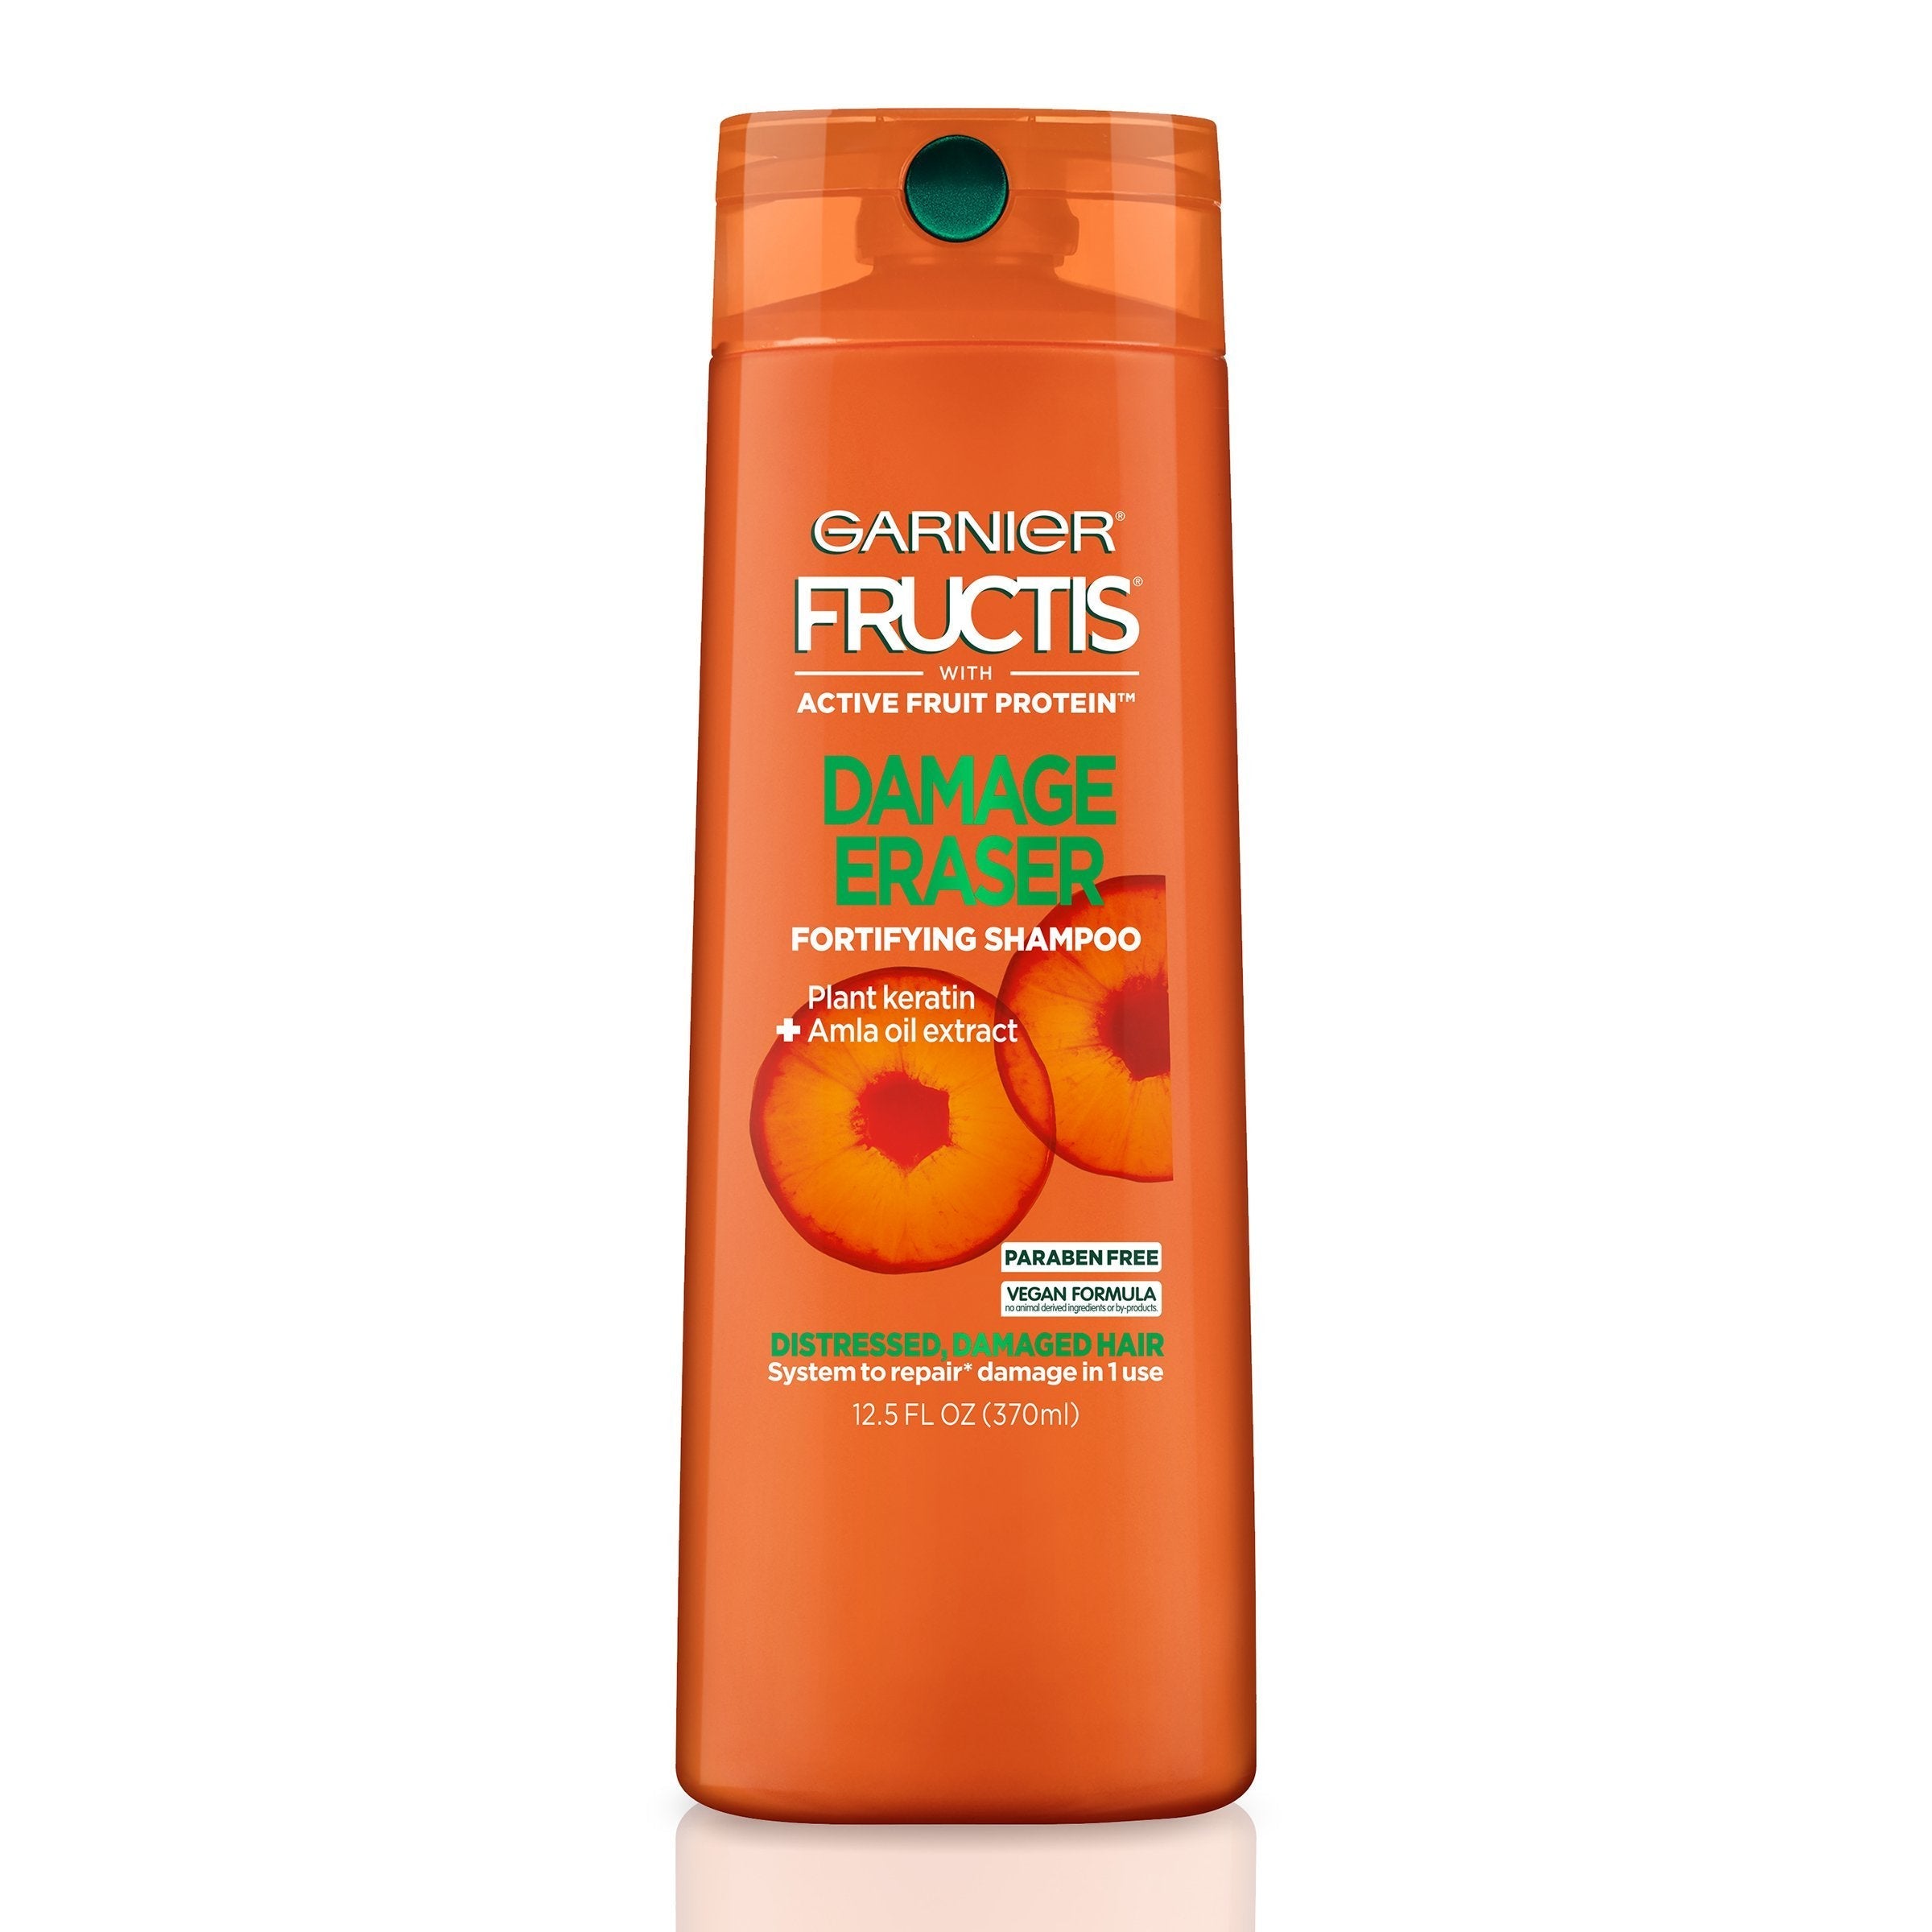 Garnier Fructis Damage Eraser Fortifying Shampoo, for Damaged Hair, Paraben Free, 12.5 fl. oz.-CaribOnline